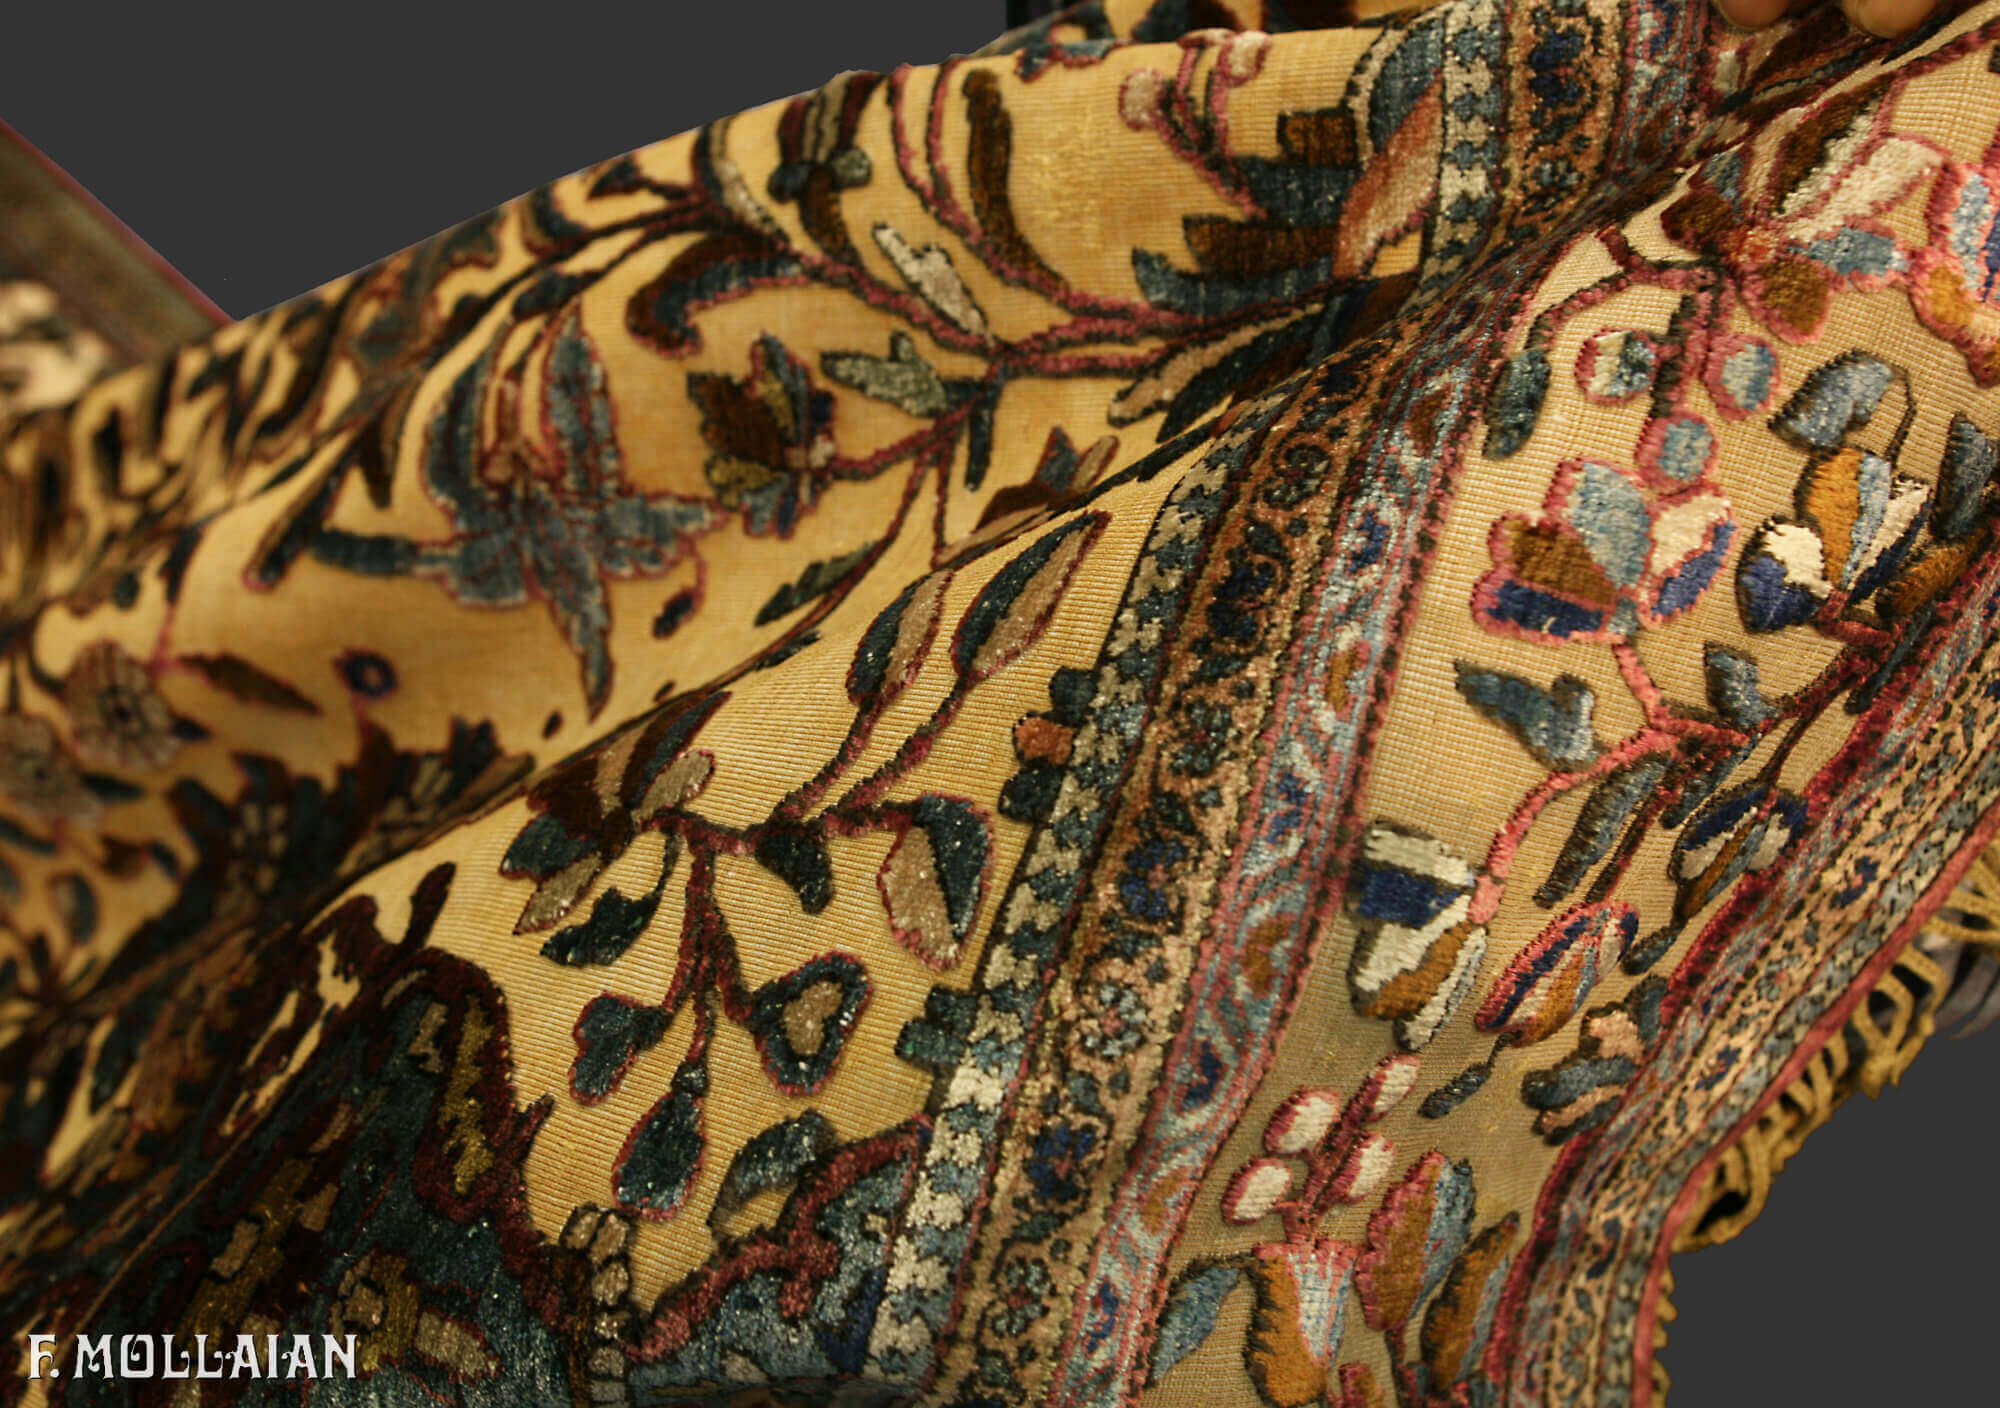 Antique Souf Persian Kashan Rug n°:33295592